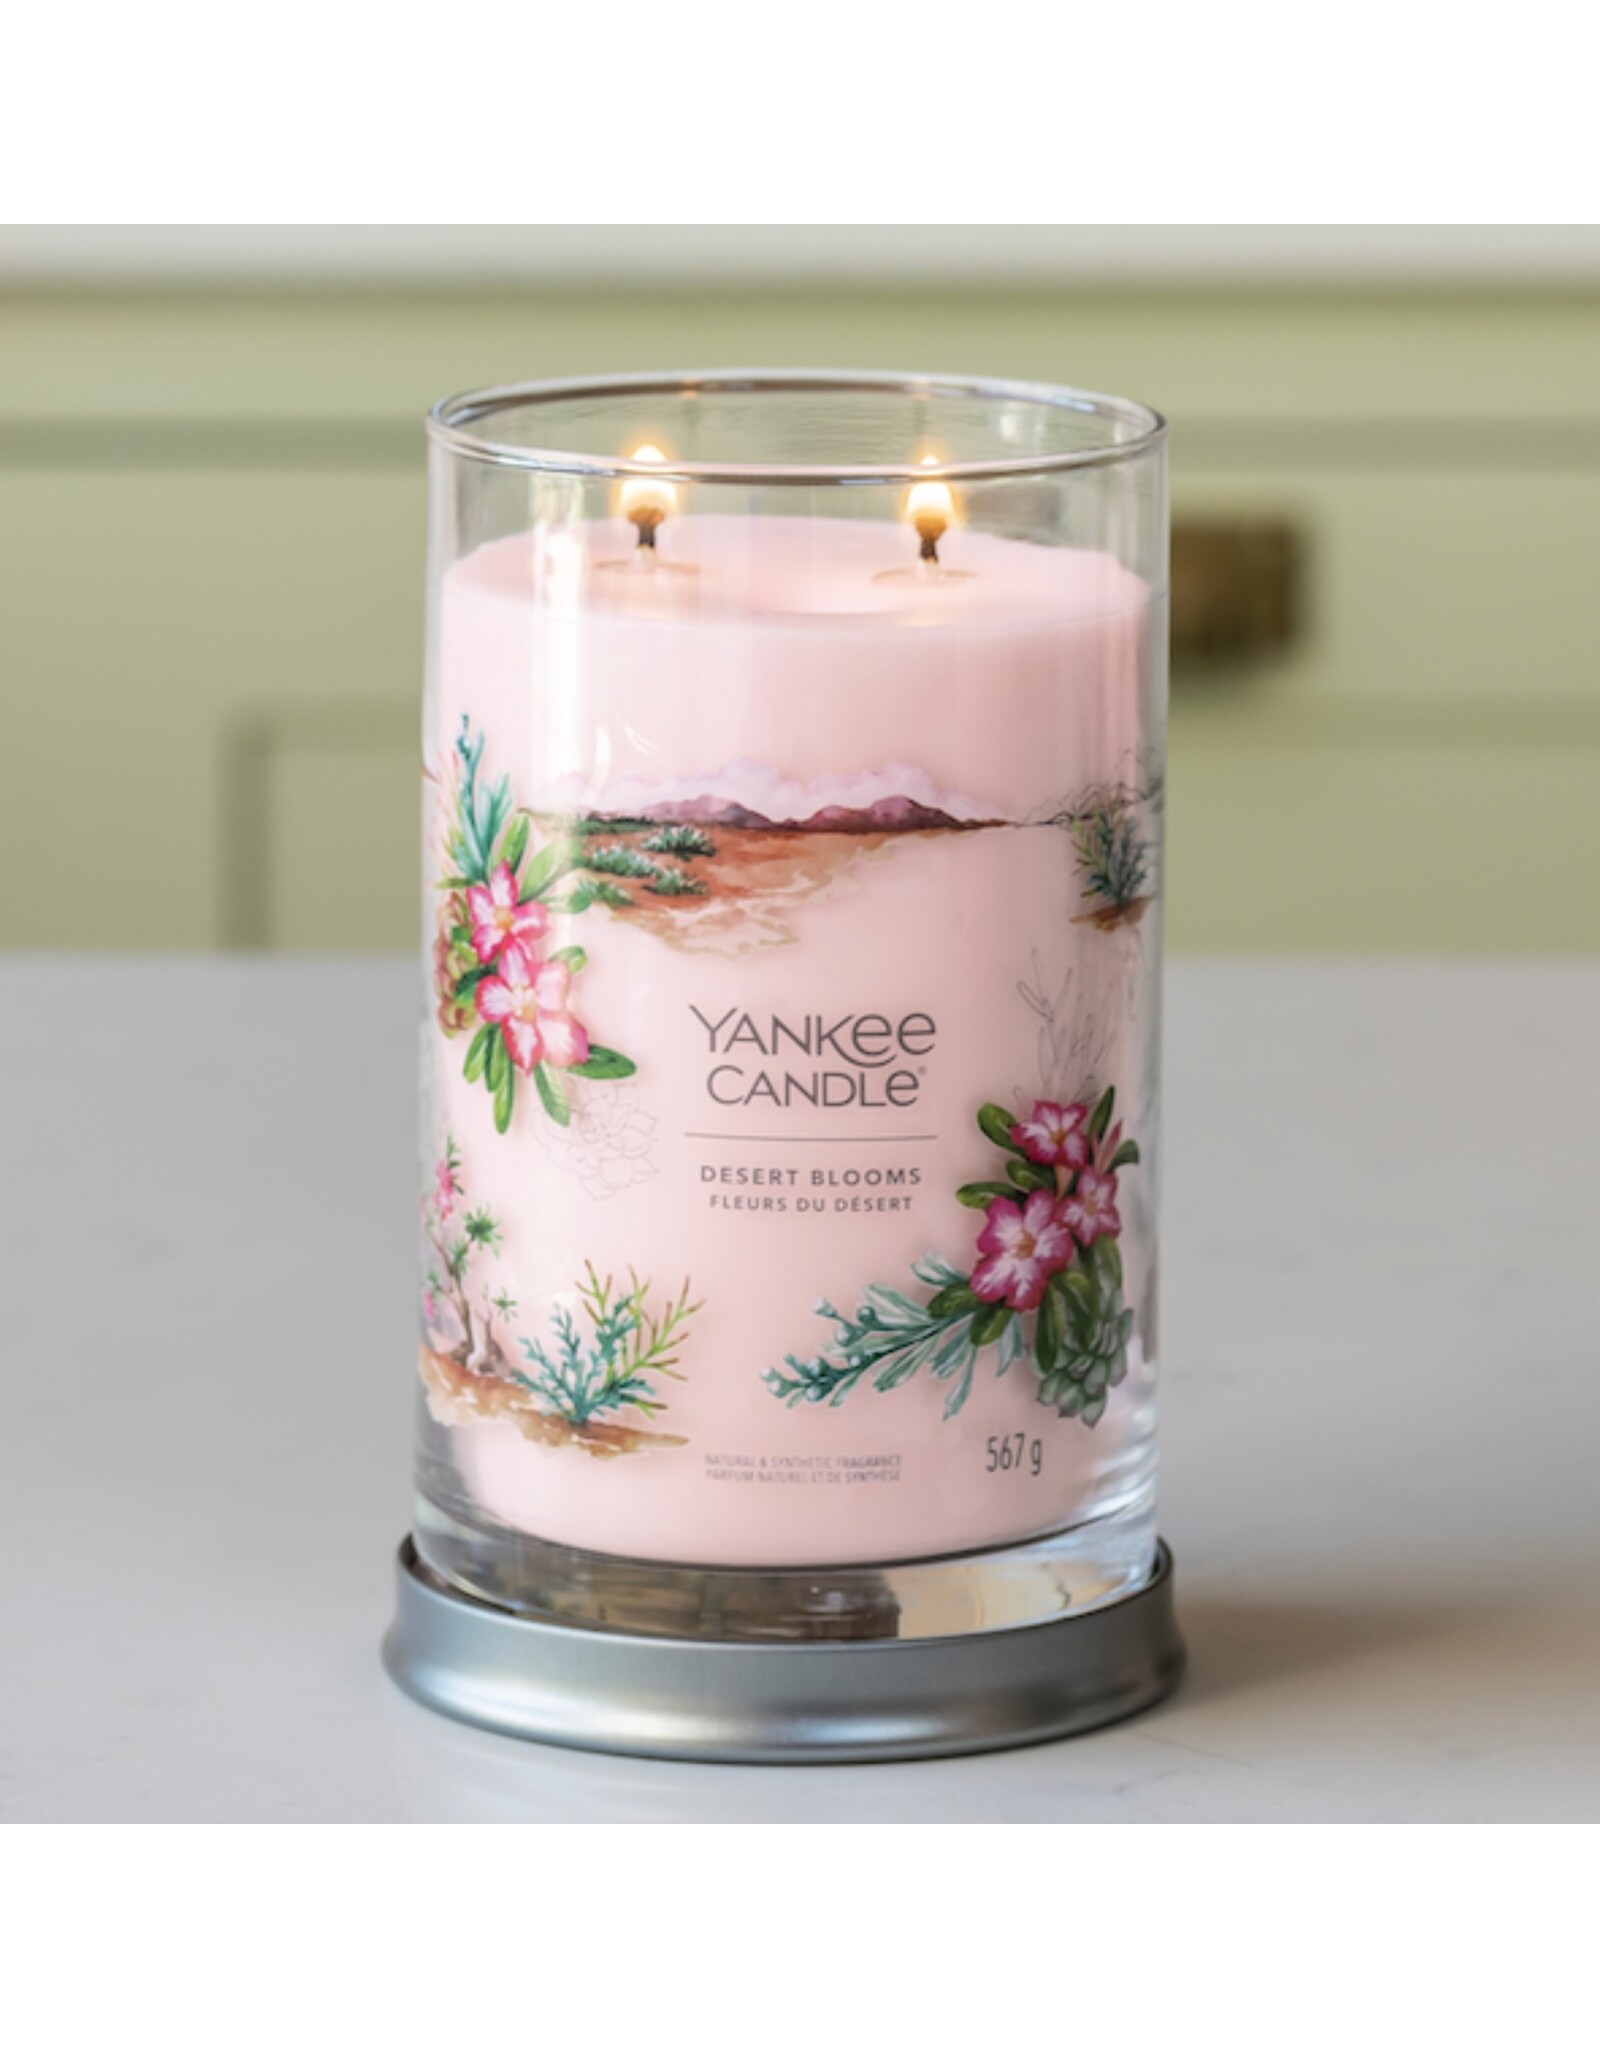 Yankee Candle Desert Blooms - Signature Large Tumbler